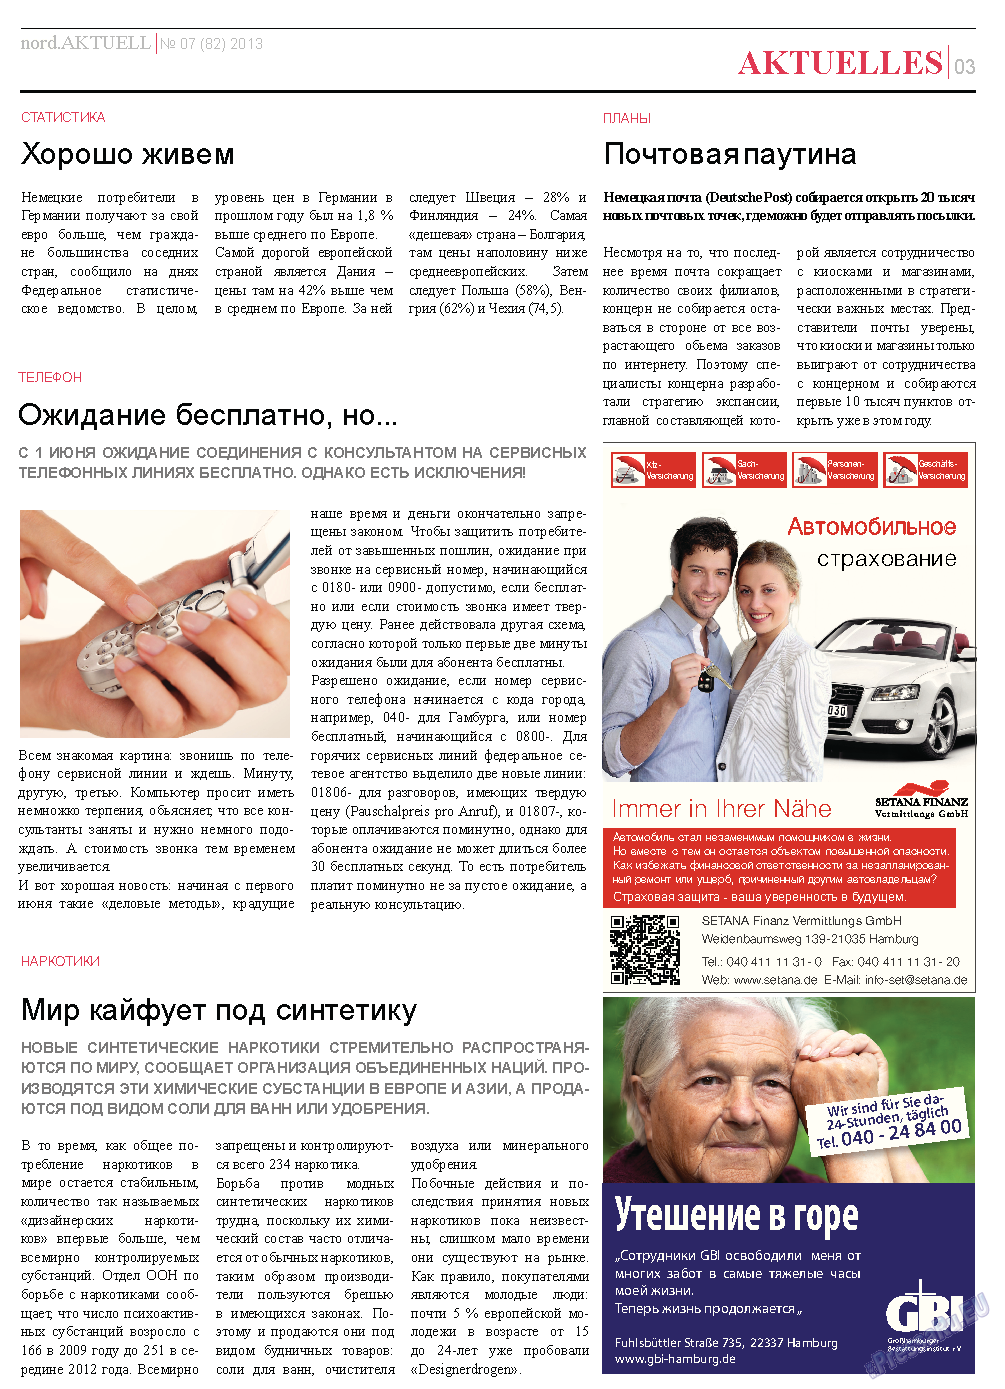 nord.Aktuell, газета. 2013 №7 стр.3